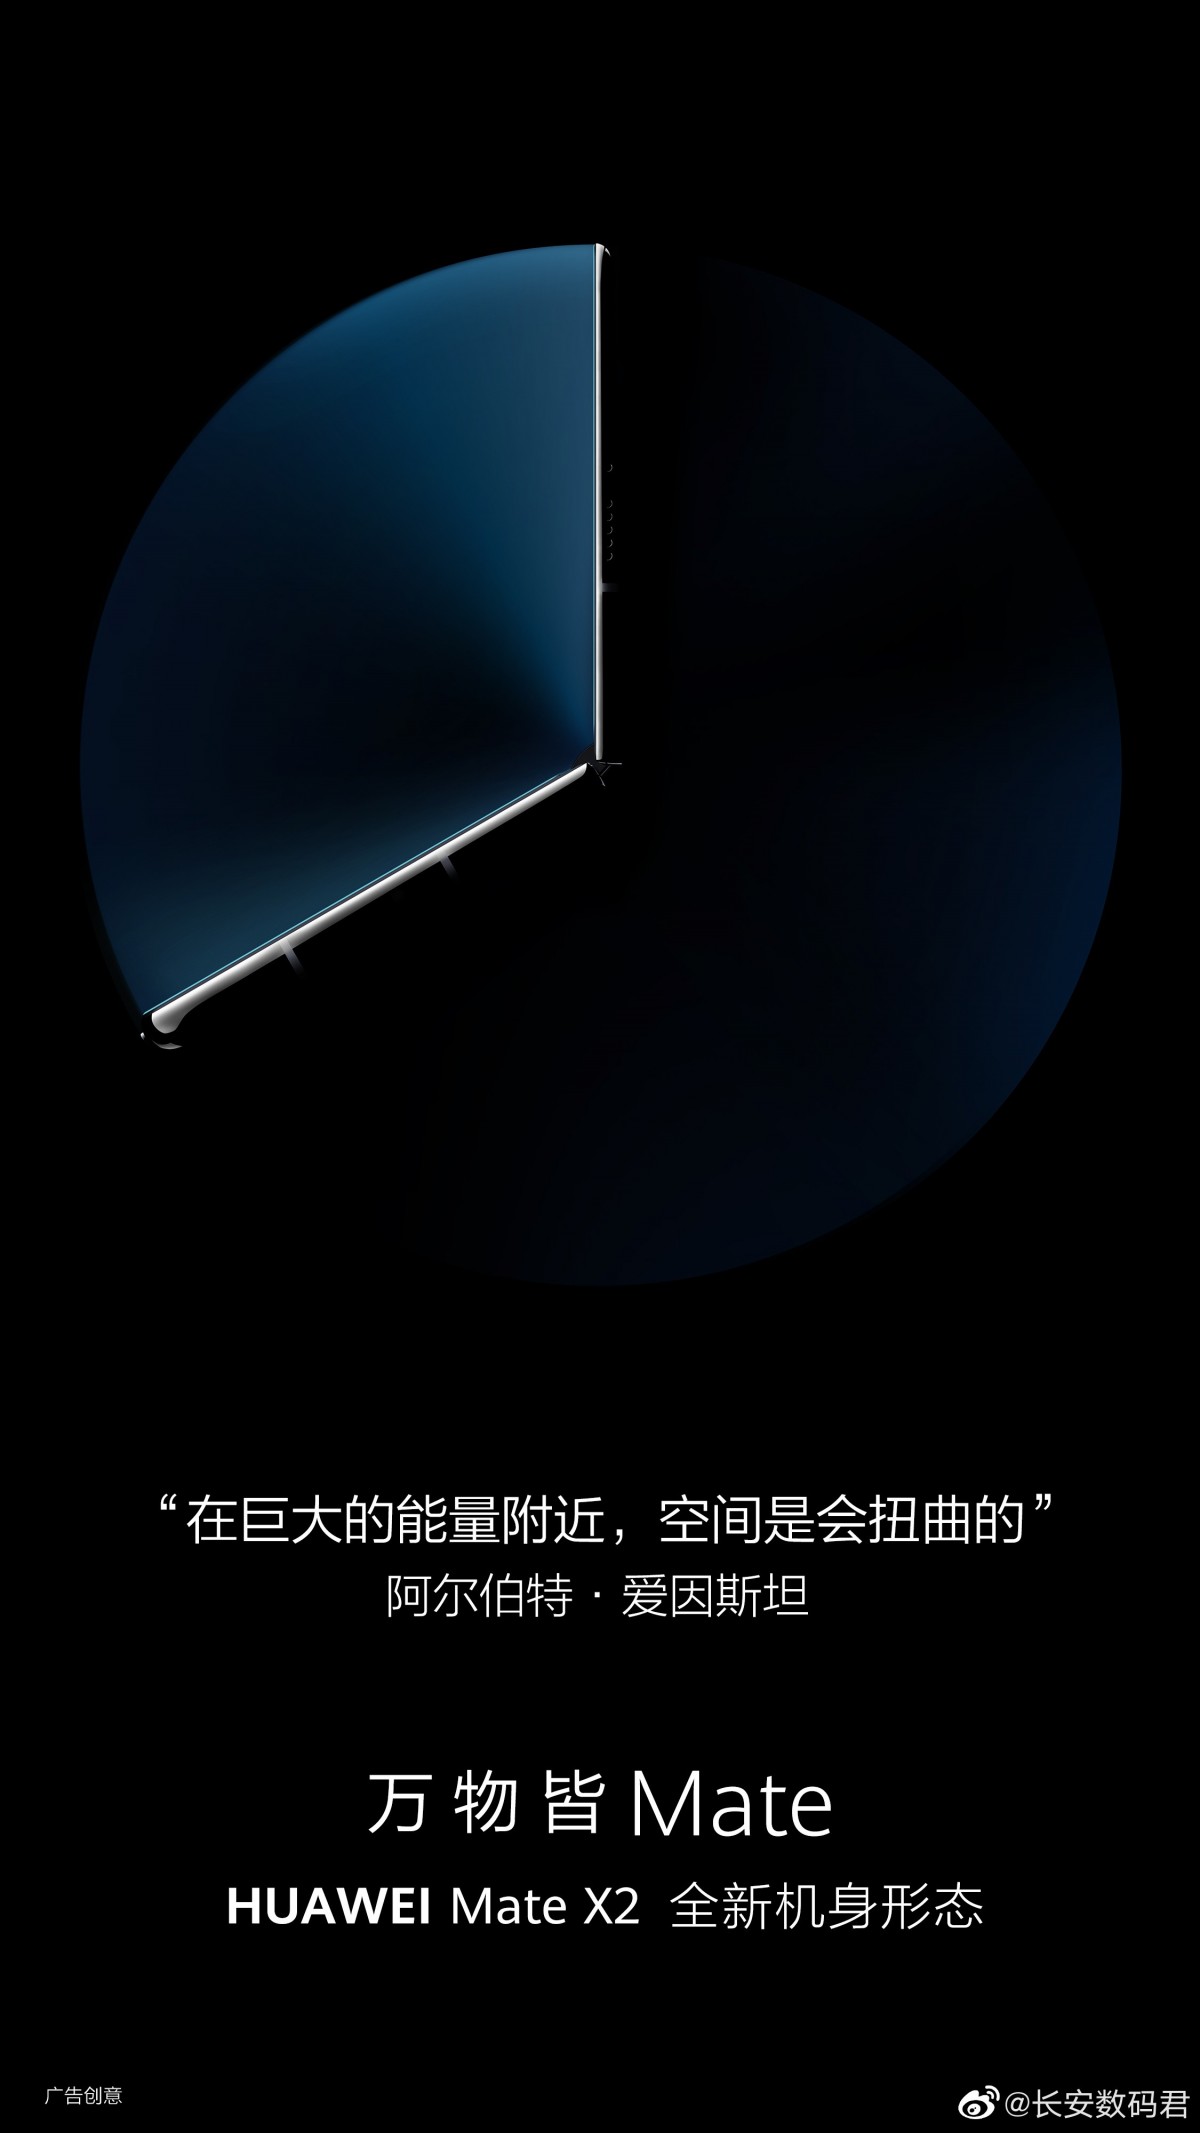 New Huawei Mate X2 image confirms inward fold